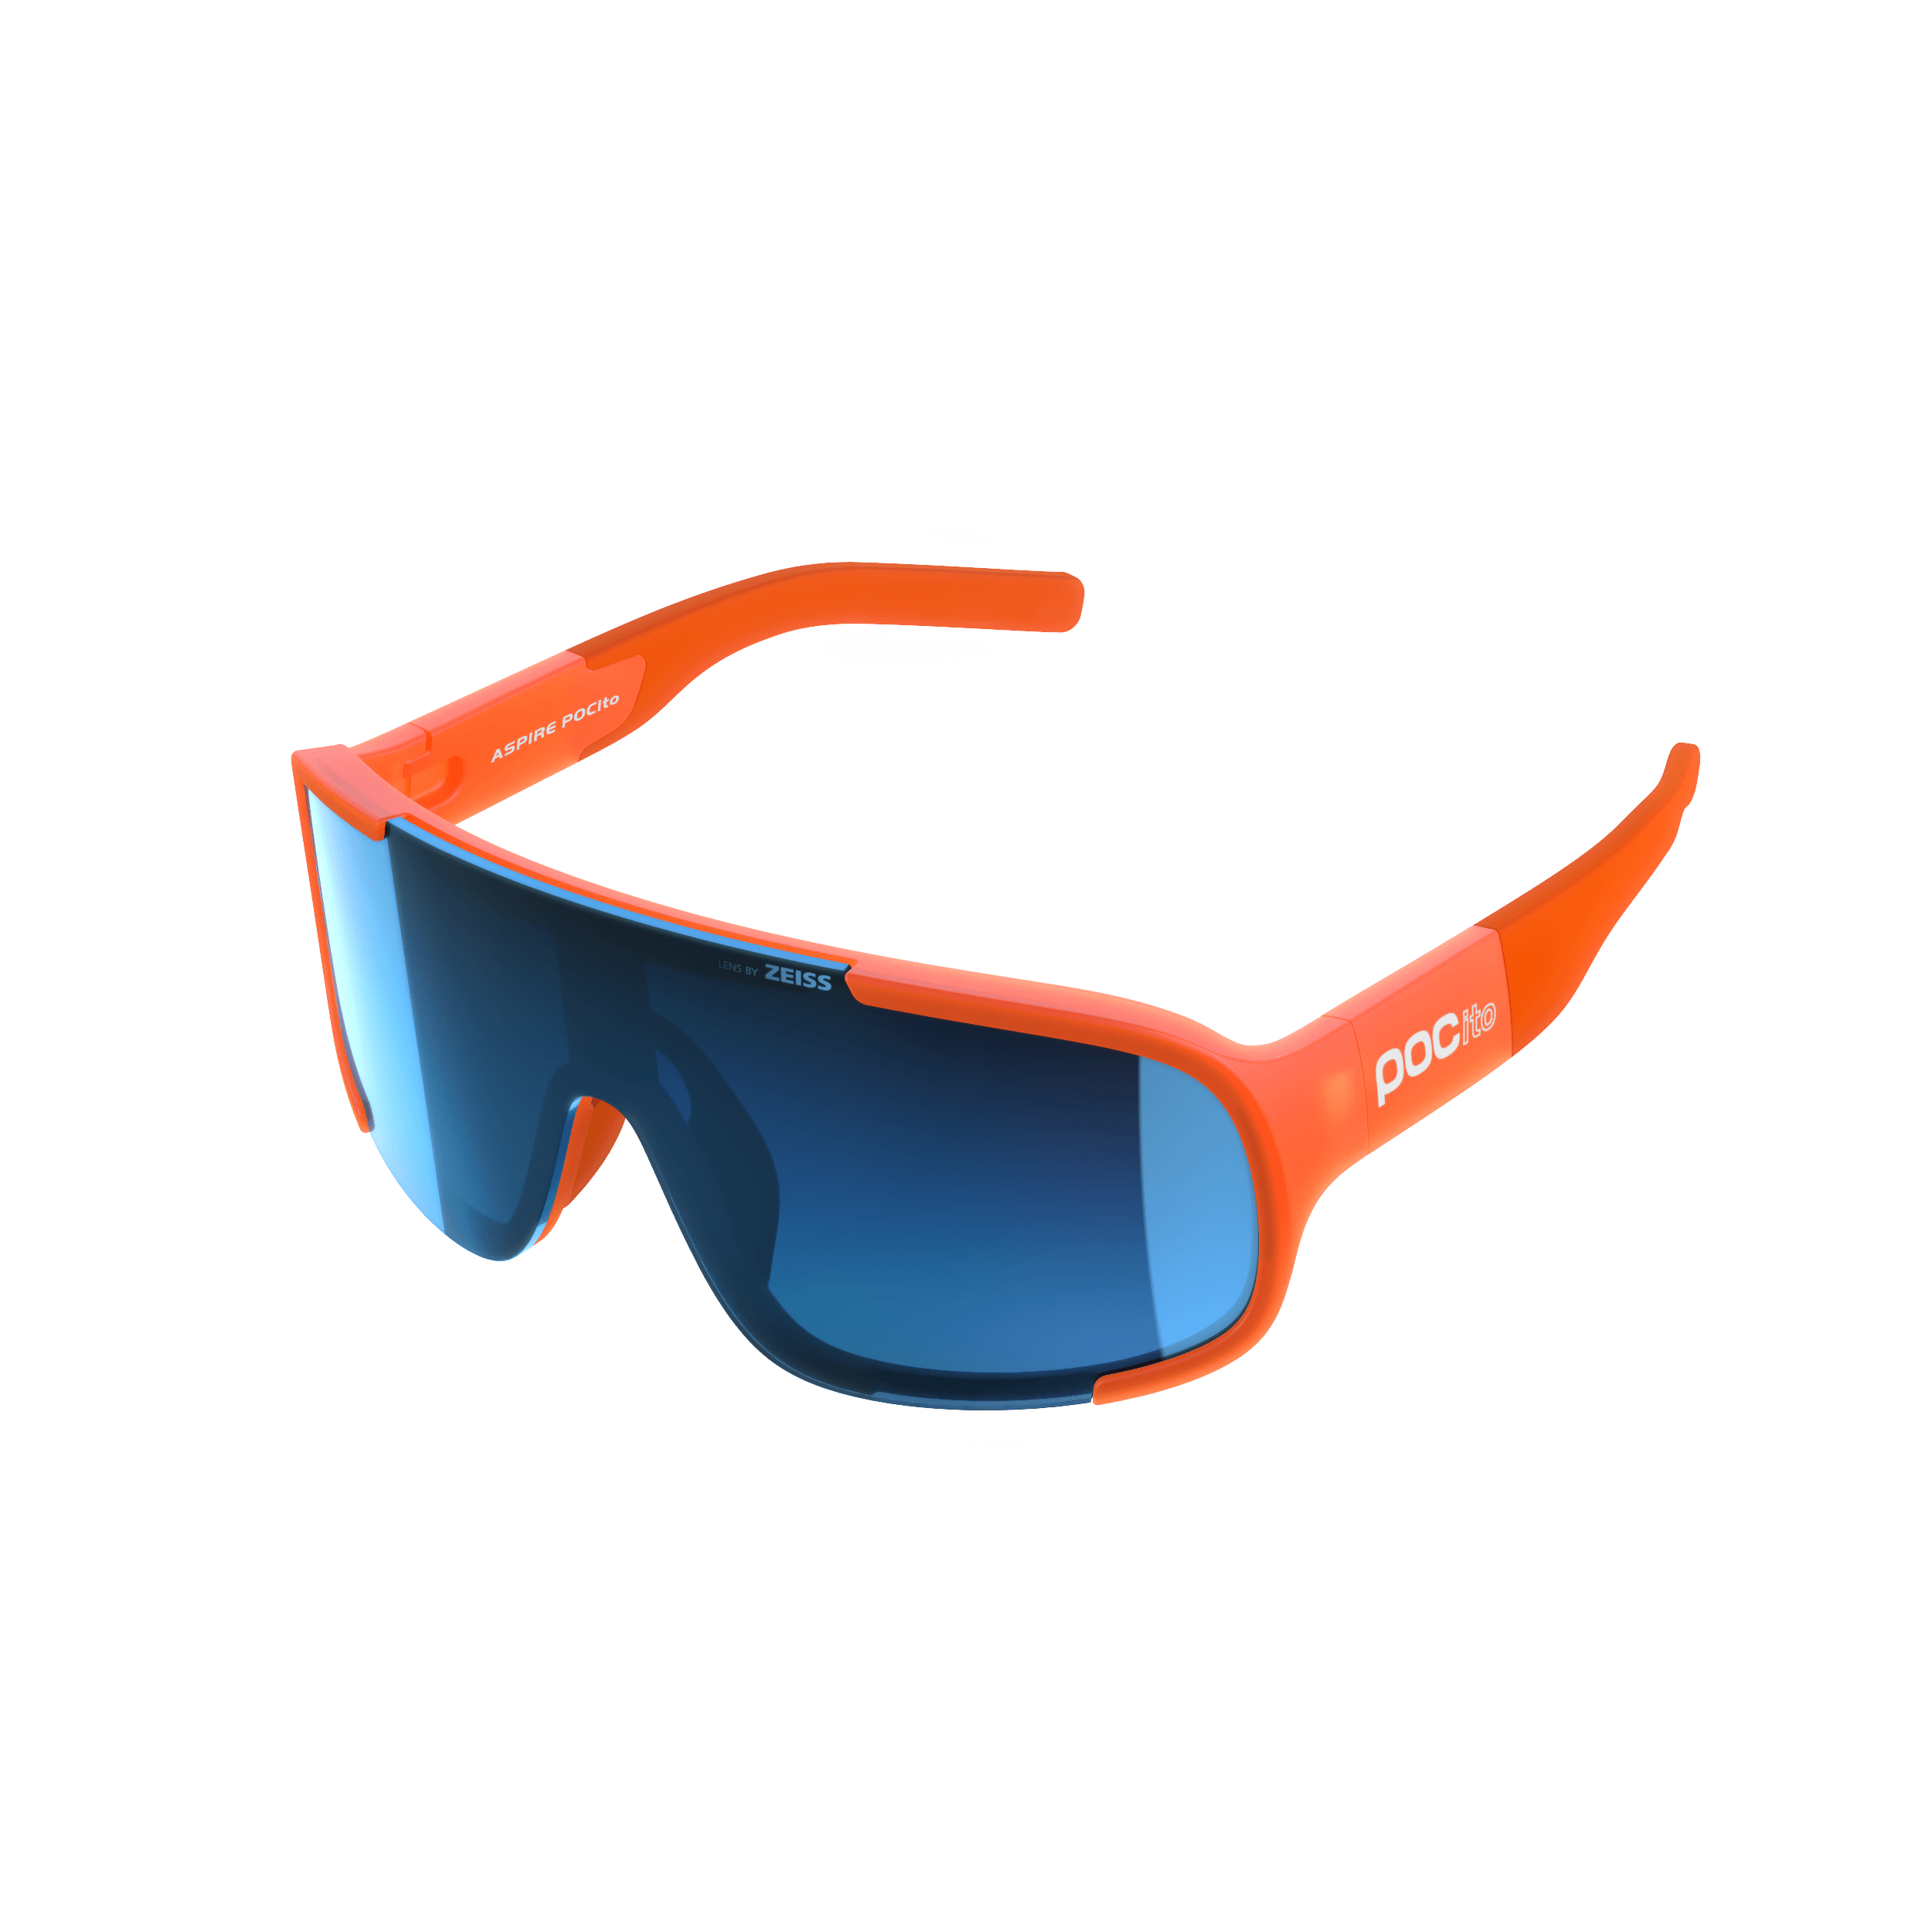 POCito Aspire Bike Sunglasses - Mountain Kids Outfitters: Fluorescent Orange Translucent, Top View